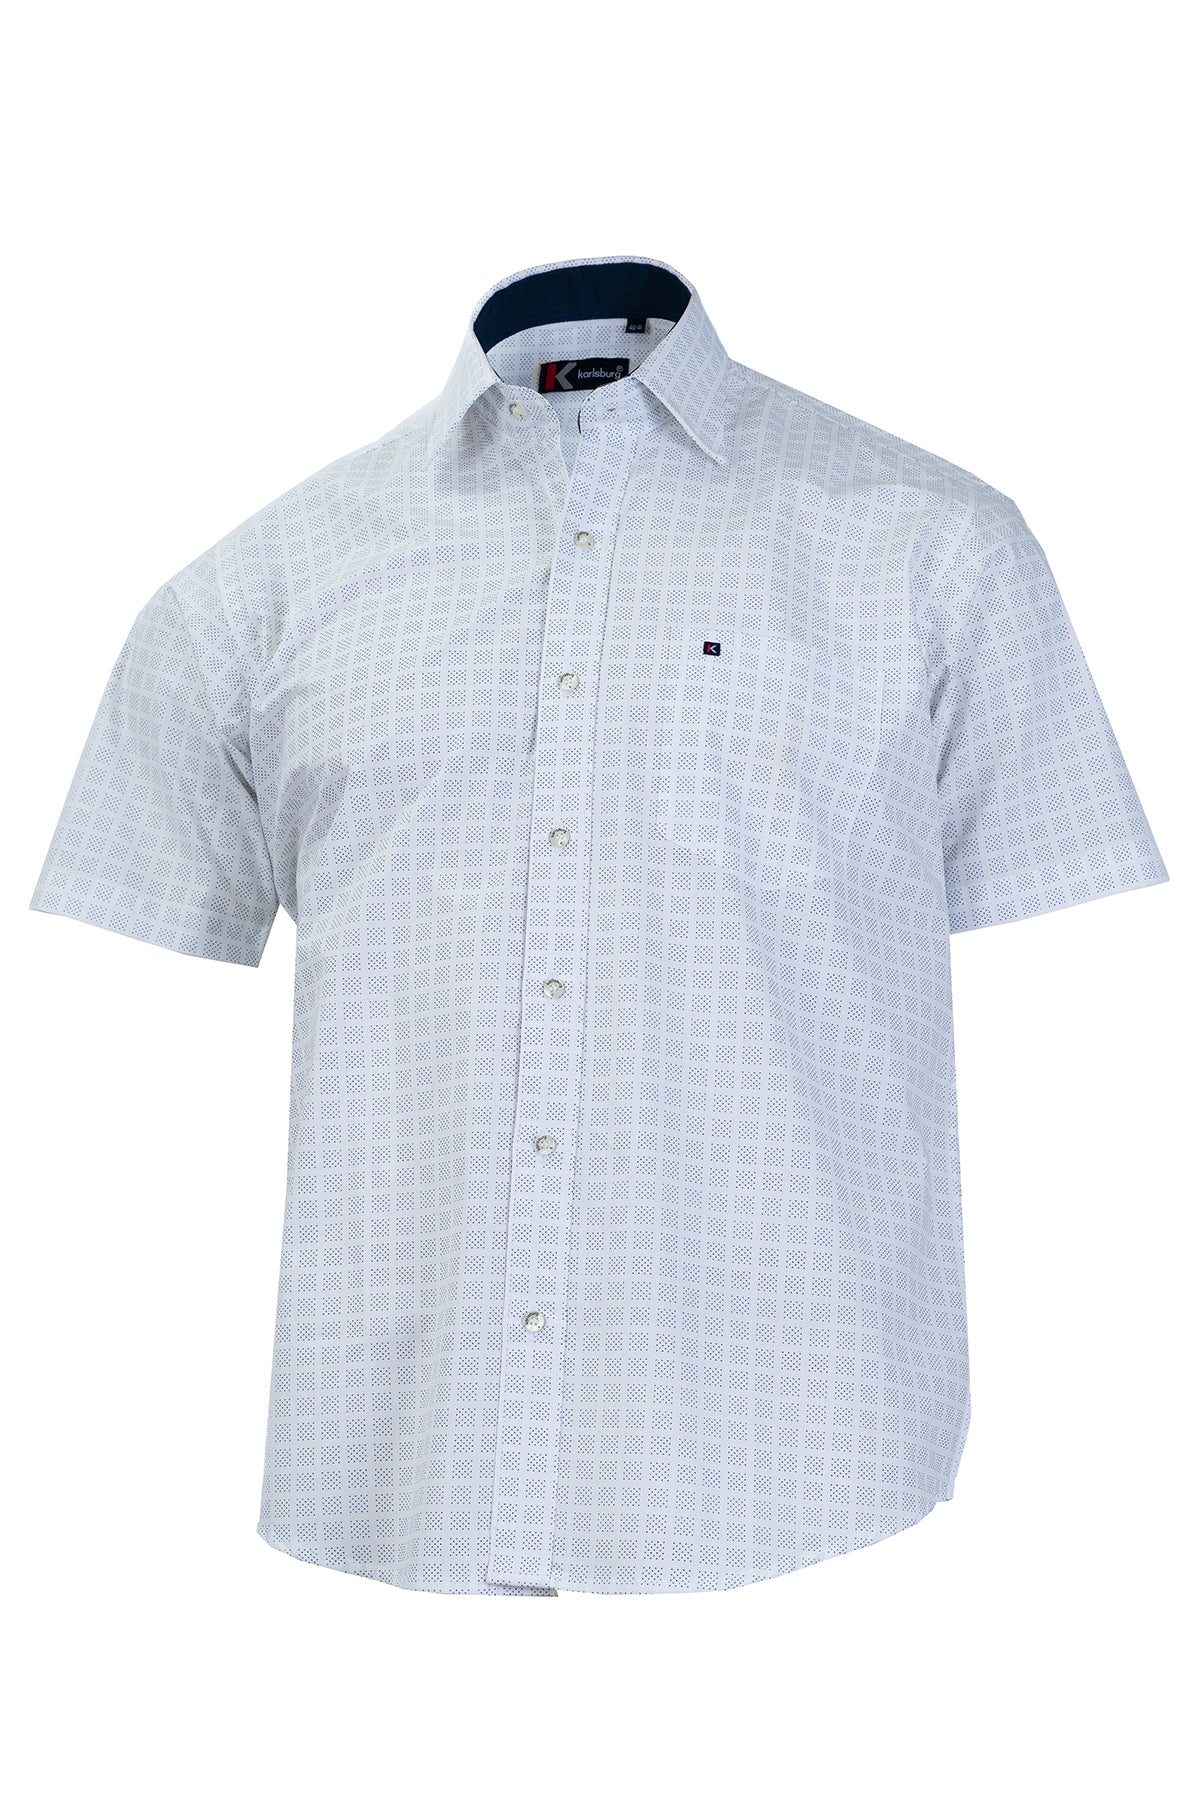 Men's White Printed Shirt